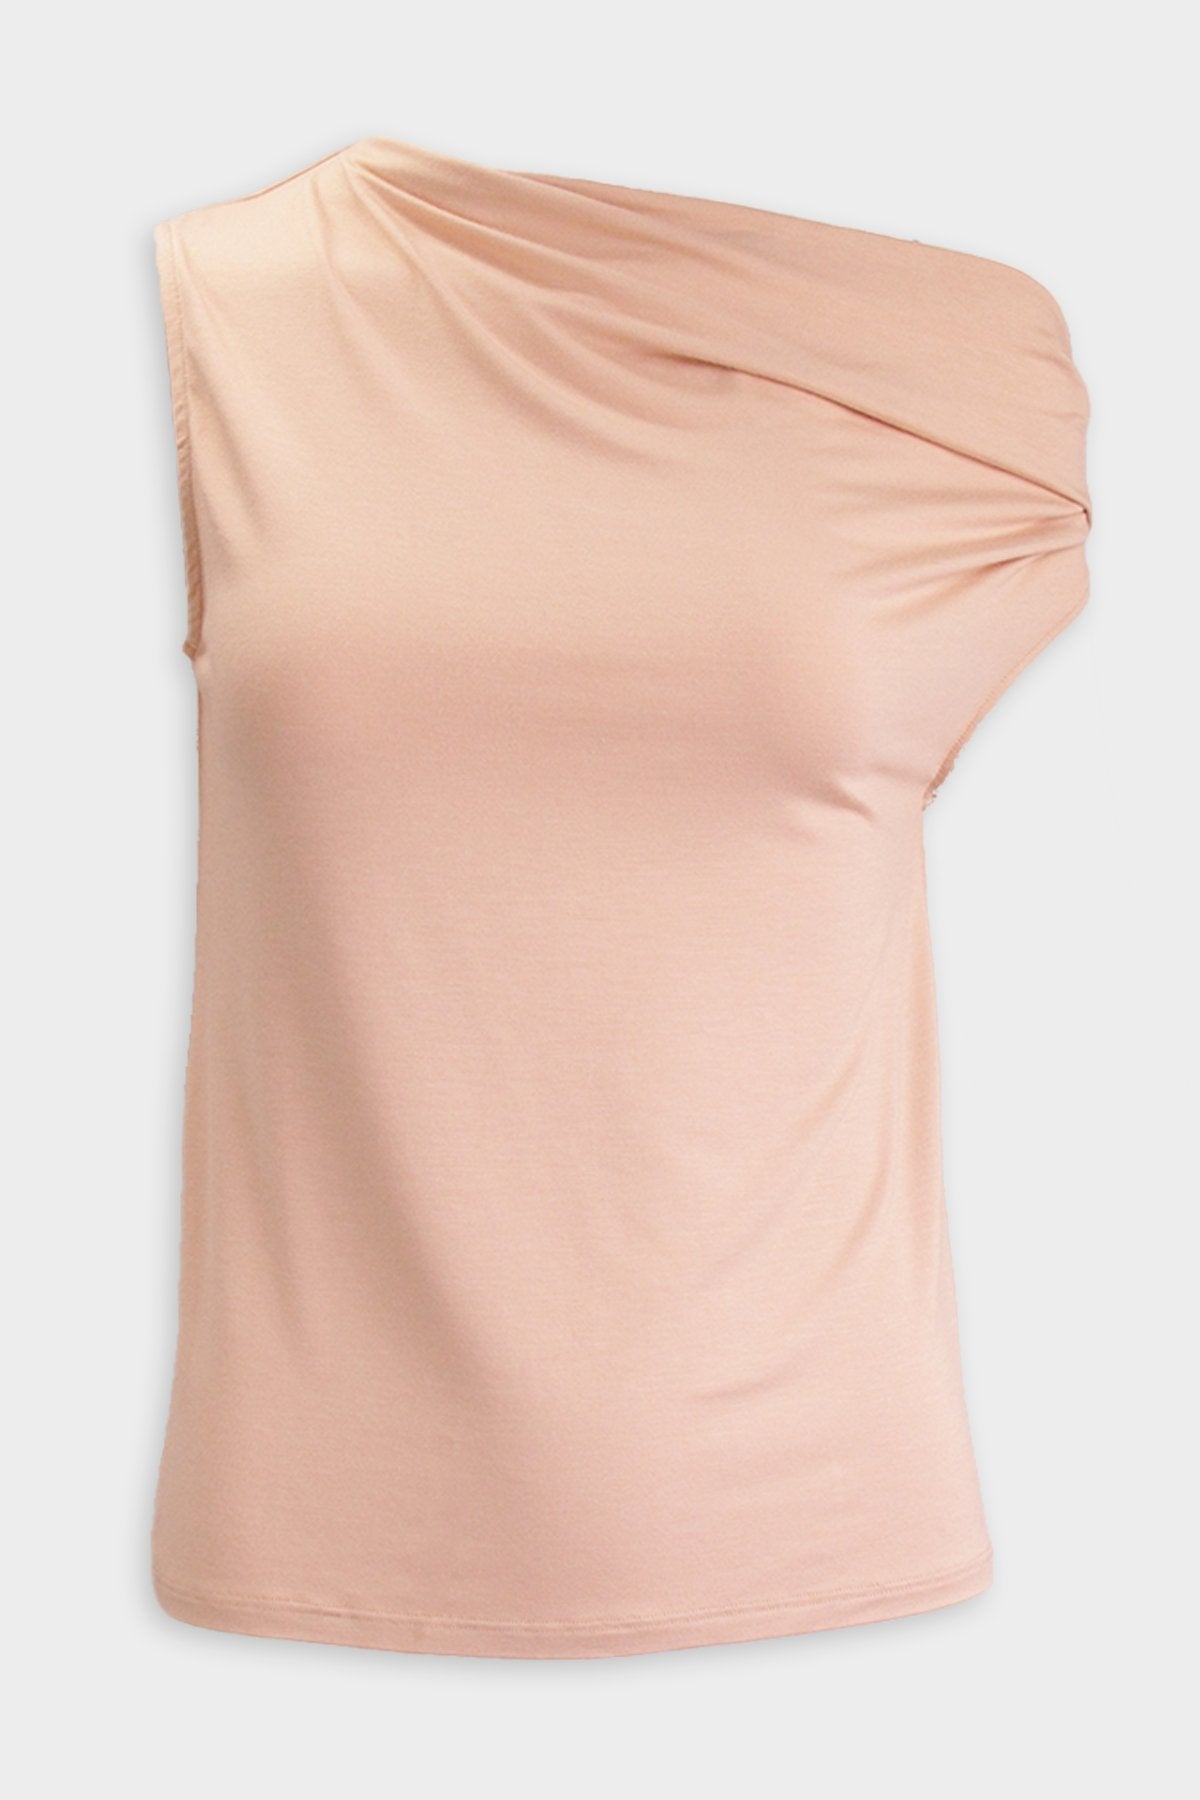 Luxe Knit Exposed Shoulder Easy Top in Dark Nude - shop-olivia.com